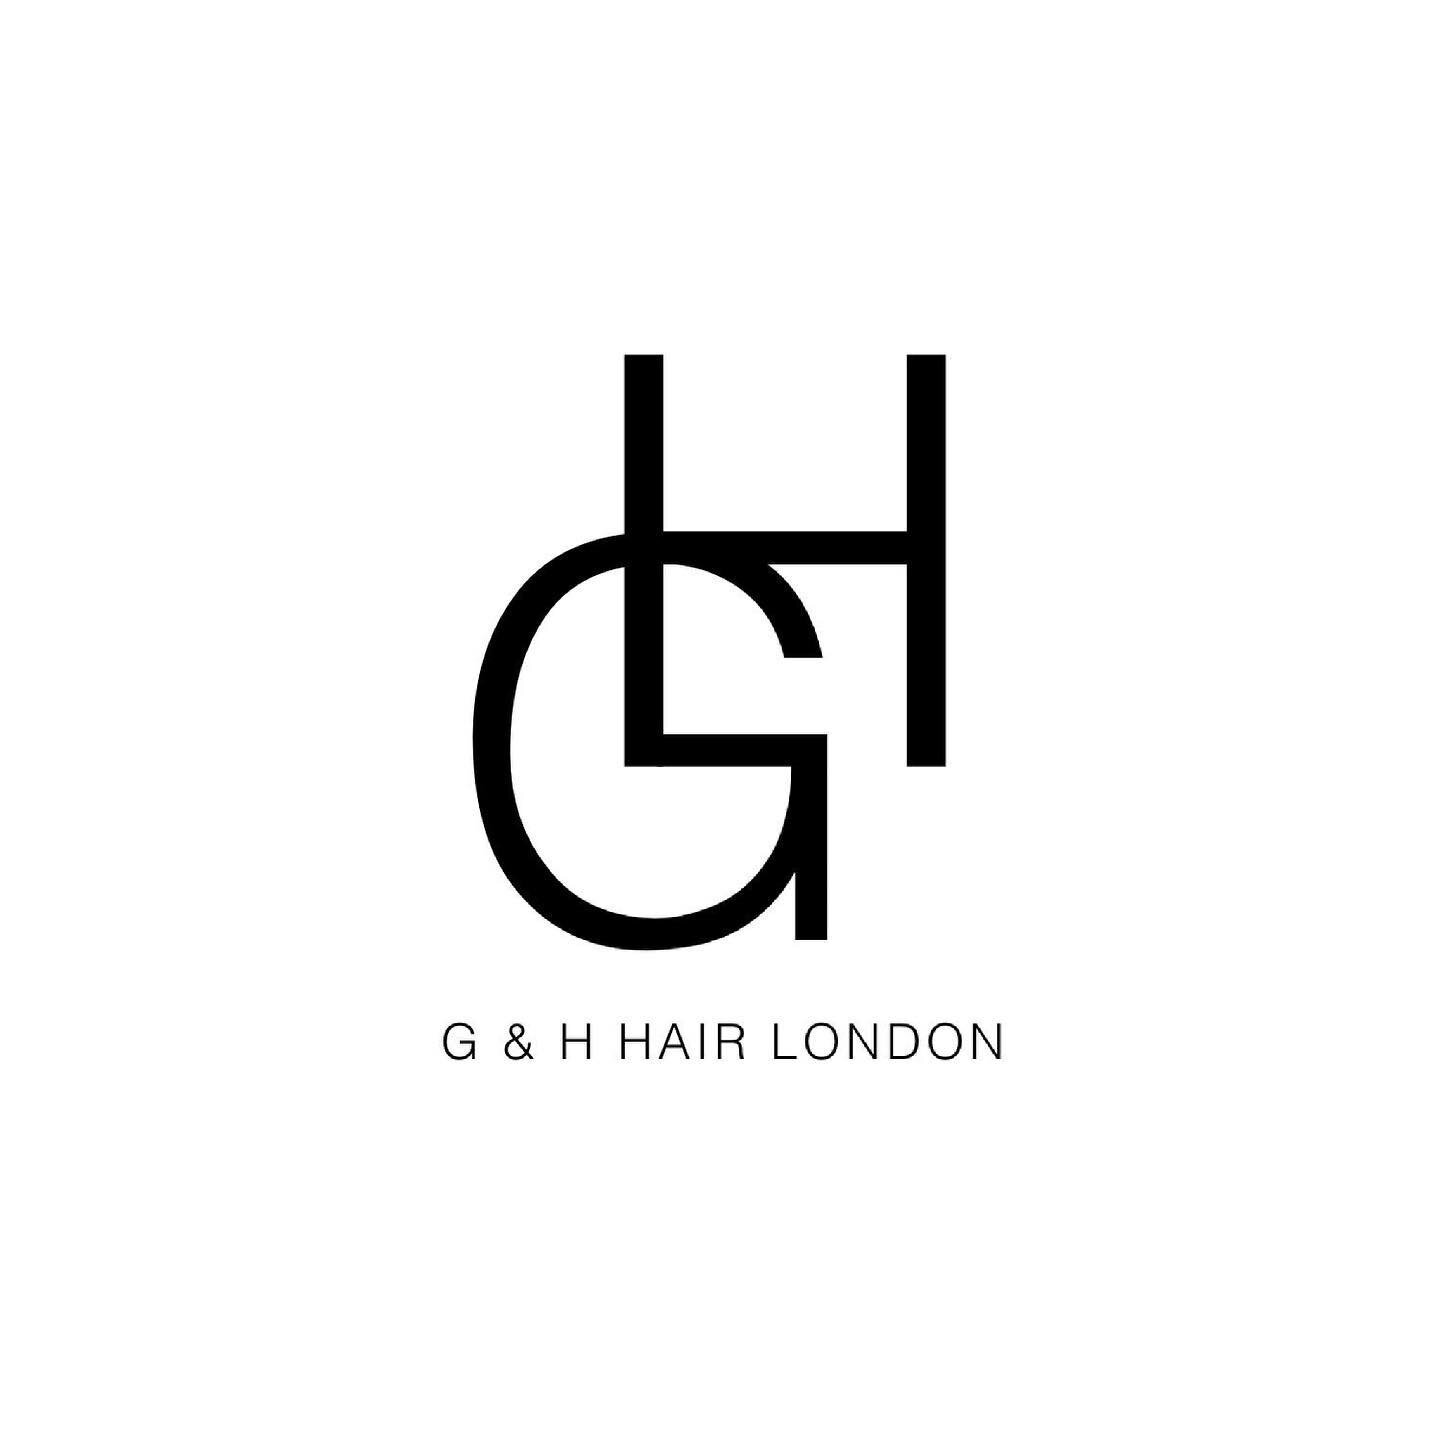 💫New week, New vibes, New goals 

www.gandhhairlondon.co.uk 

&bull;
&bull;
&bull;
&bull;

#newweeknewgoals #londonhair #luxuryhaircare #londonhairstylist #londonhairdresser #londonhairsalon #bespokehair #londonmayfair #mayfairhair #haircut #haircol